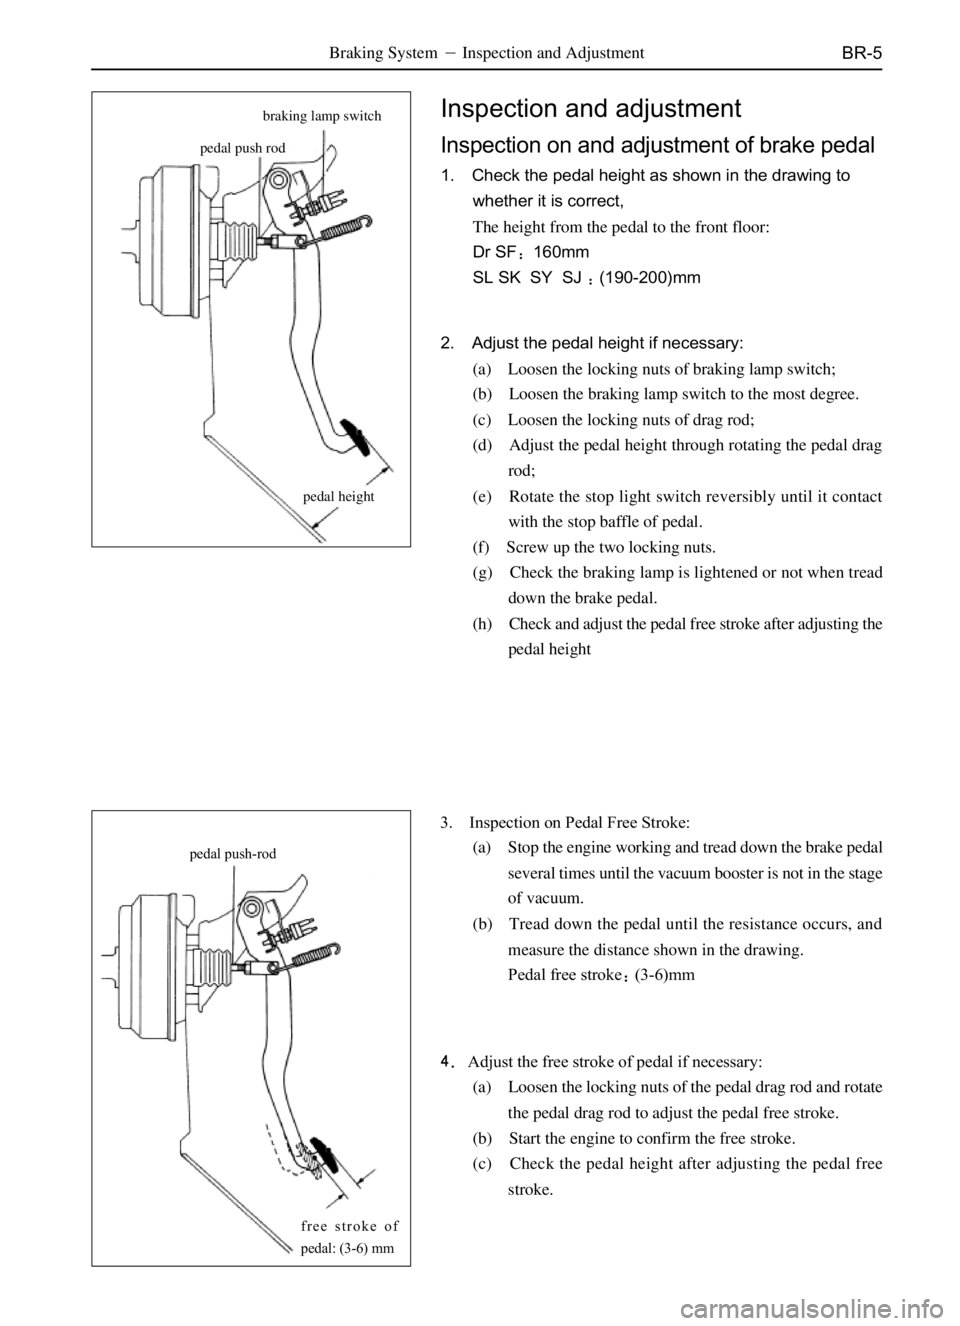 GREAT WALL SAILOR 2006  Service Manual BR-5Braking System Inspection and Adjustment
pedal push rodbraking lamp switch
pedal push-rod
free stroke of
pedal: (3-6) mm
Inspection and adjustment
Inspection on and adjustment of brake pedal
1. C